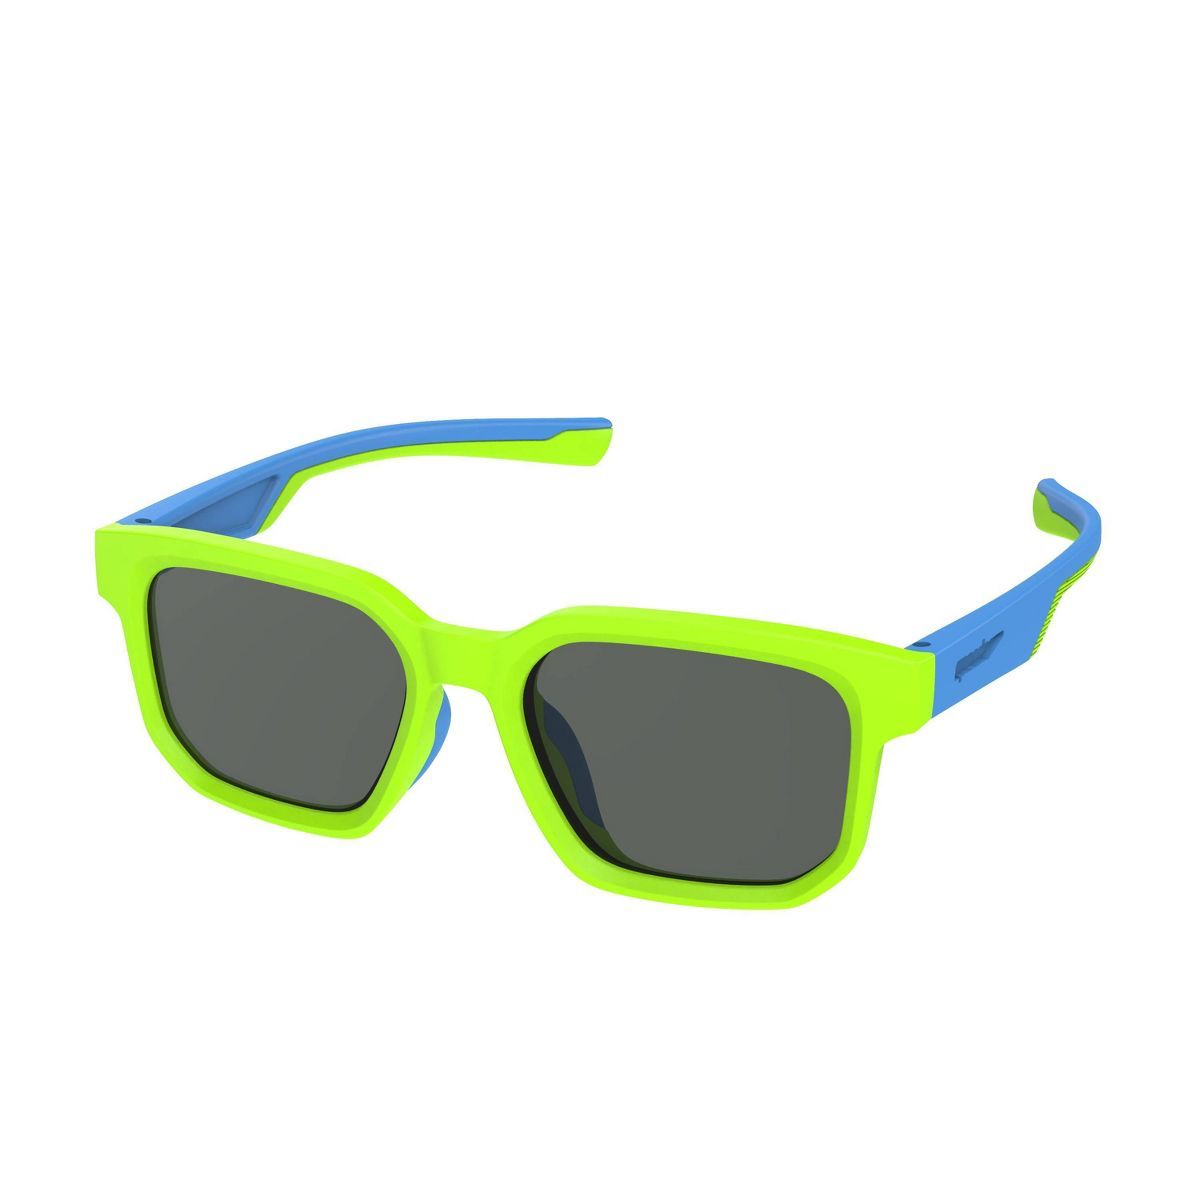 Speedo Kids' Sunglasses - Green | Target